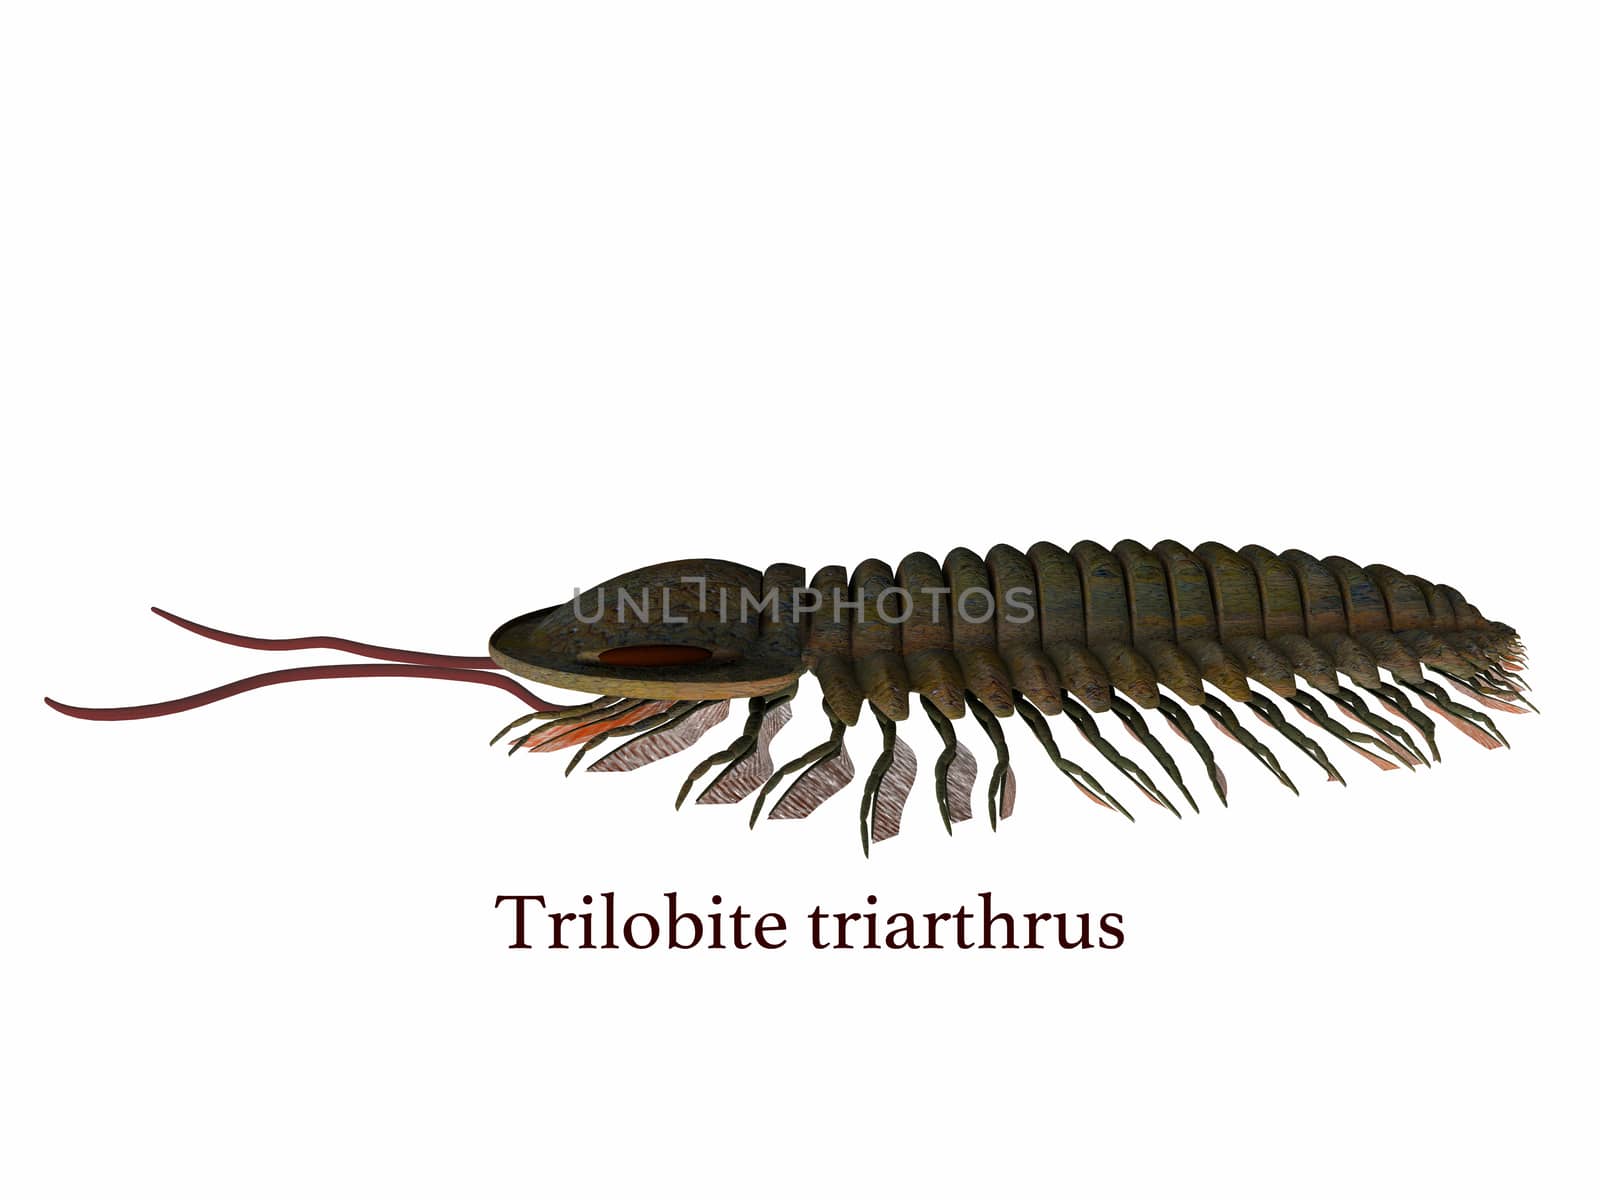 Trilobite triarthrus animal lived in the Cambrian seas of Canada and North America in the Paleozoic Era.